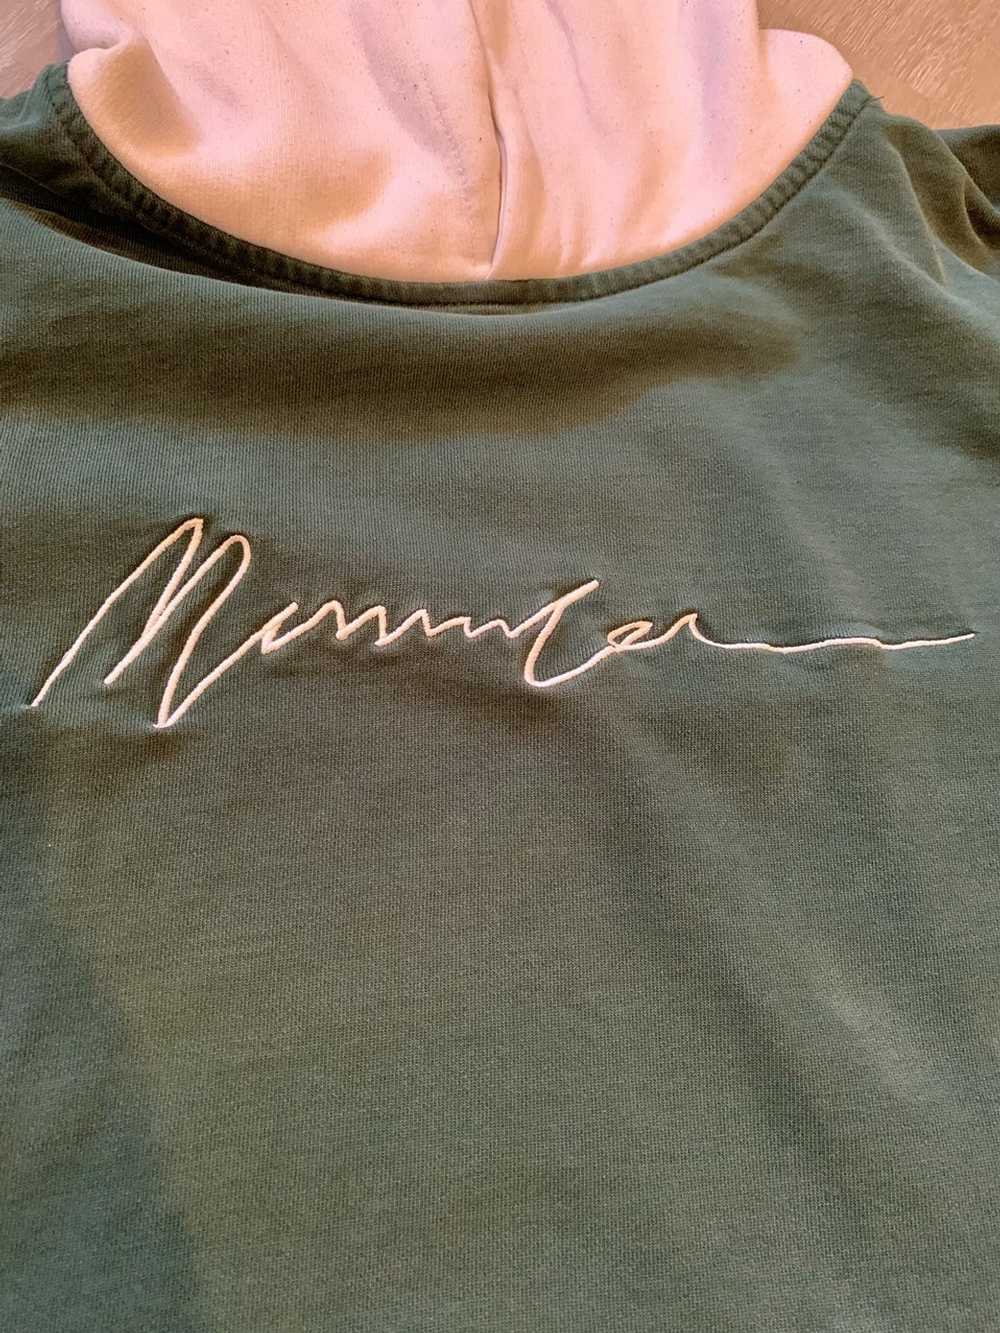 Menace embroidered mennace hoodie - image 2